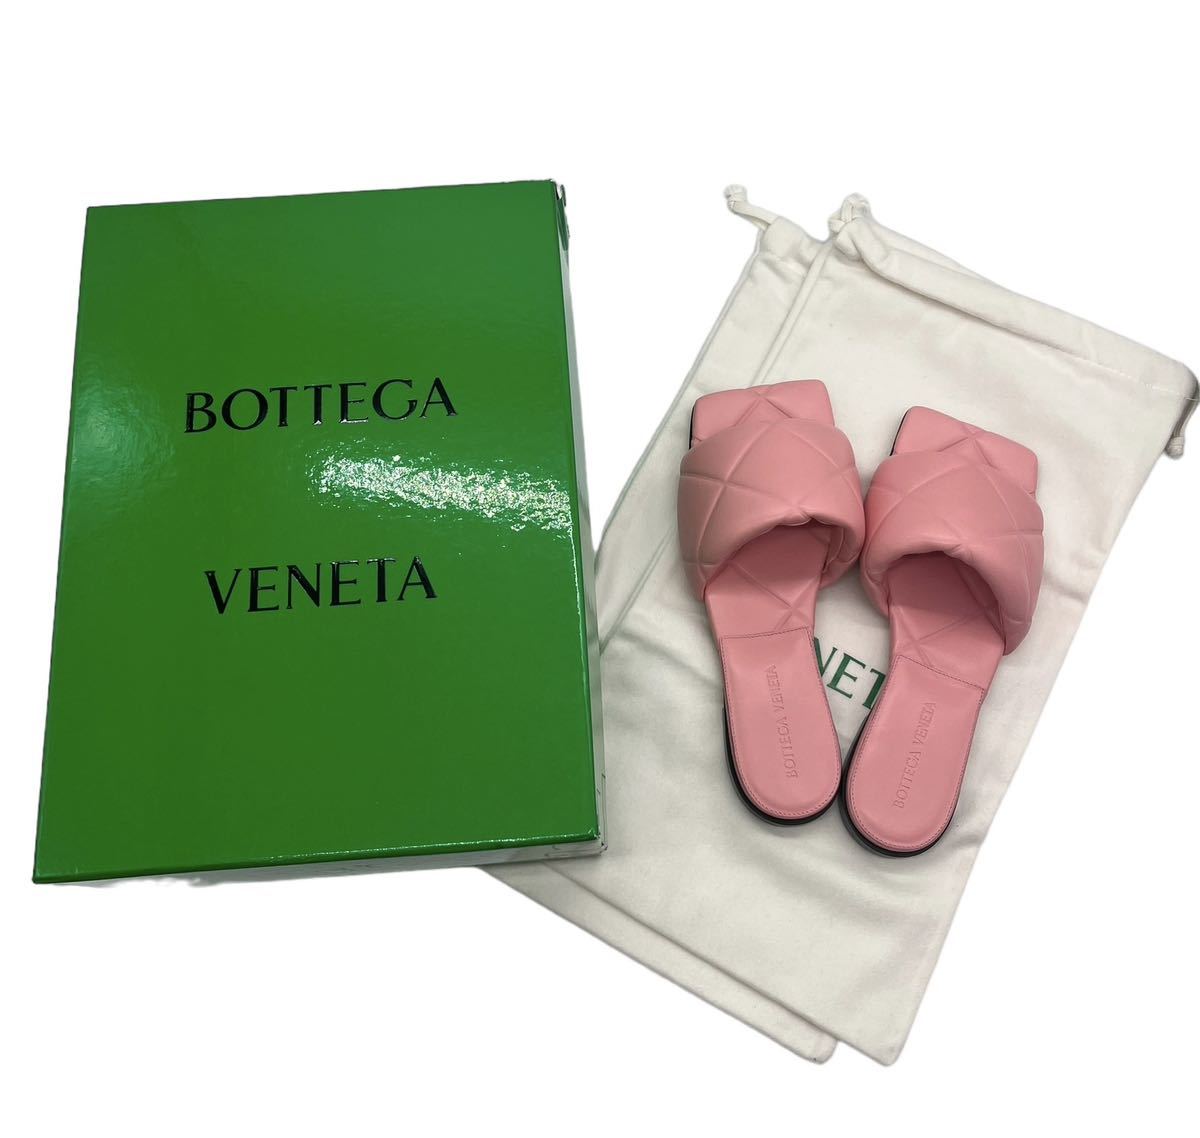 Bottega Veneta ボッテガ ヴェネタ リド サンダル カセット フラット ピンク レディース 35 箱付き【中古】